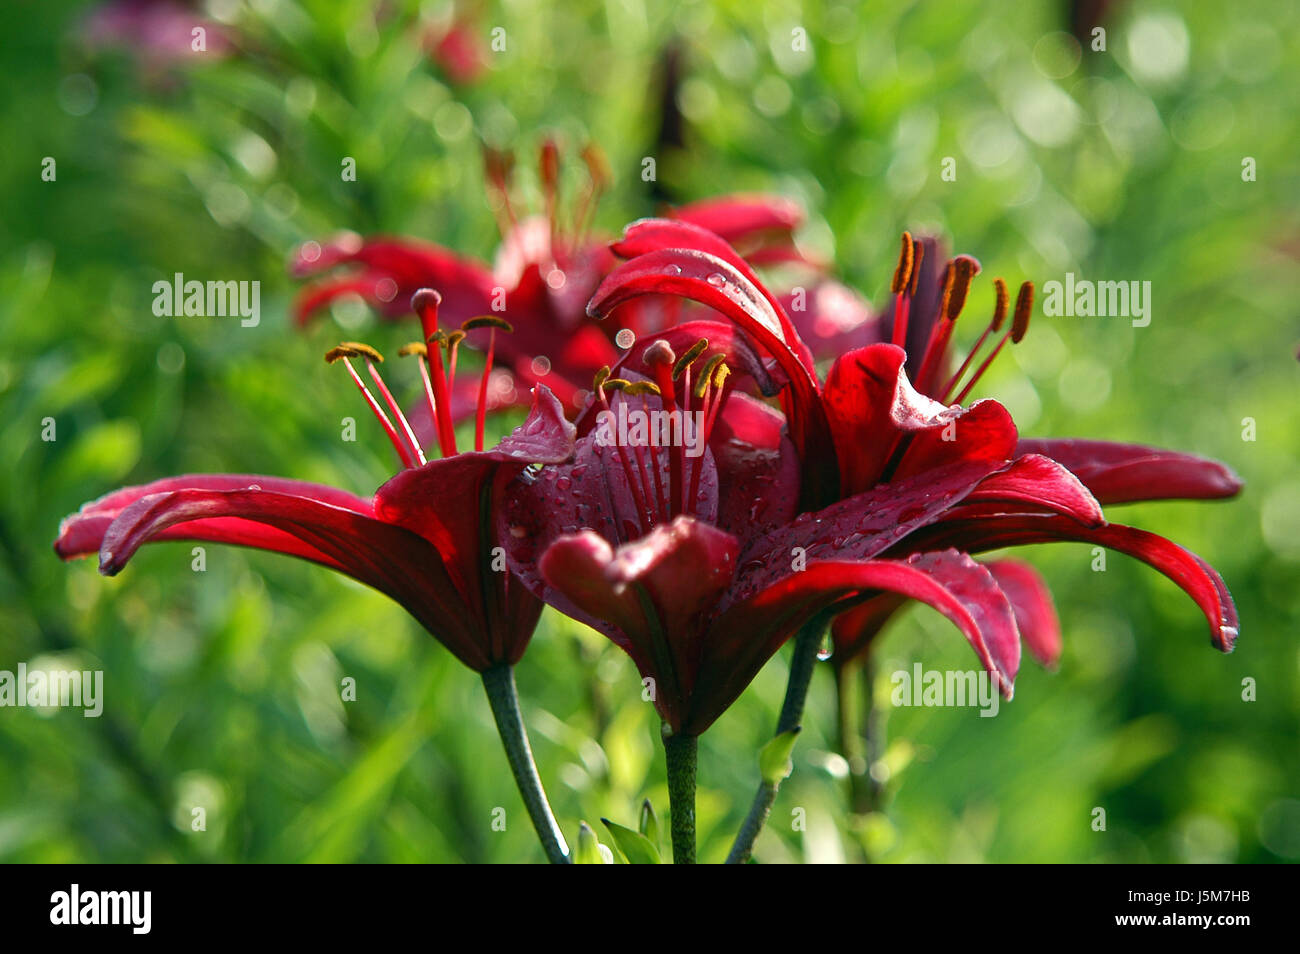 flower plant green bloom blossom flourish flourishing lily bud pollen dark red Stock Photo